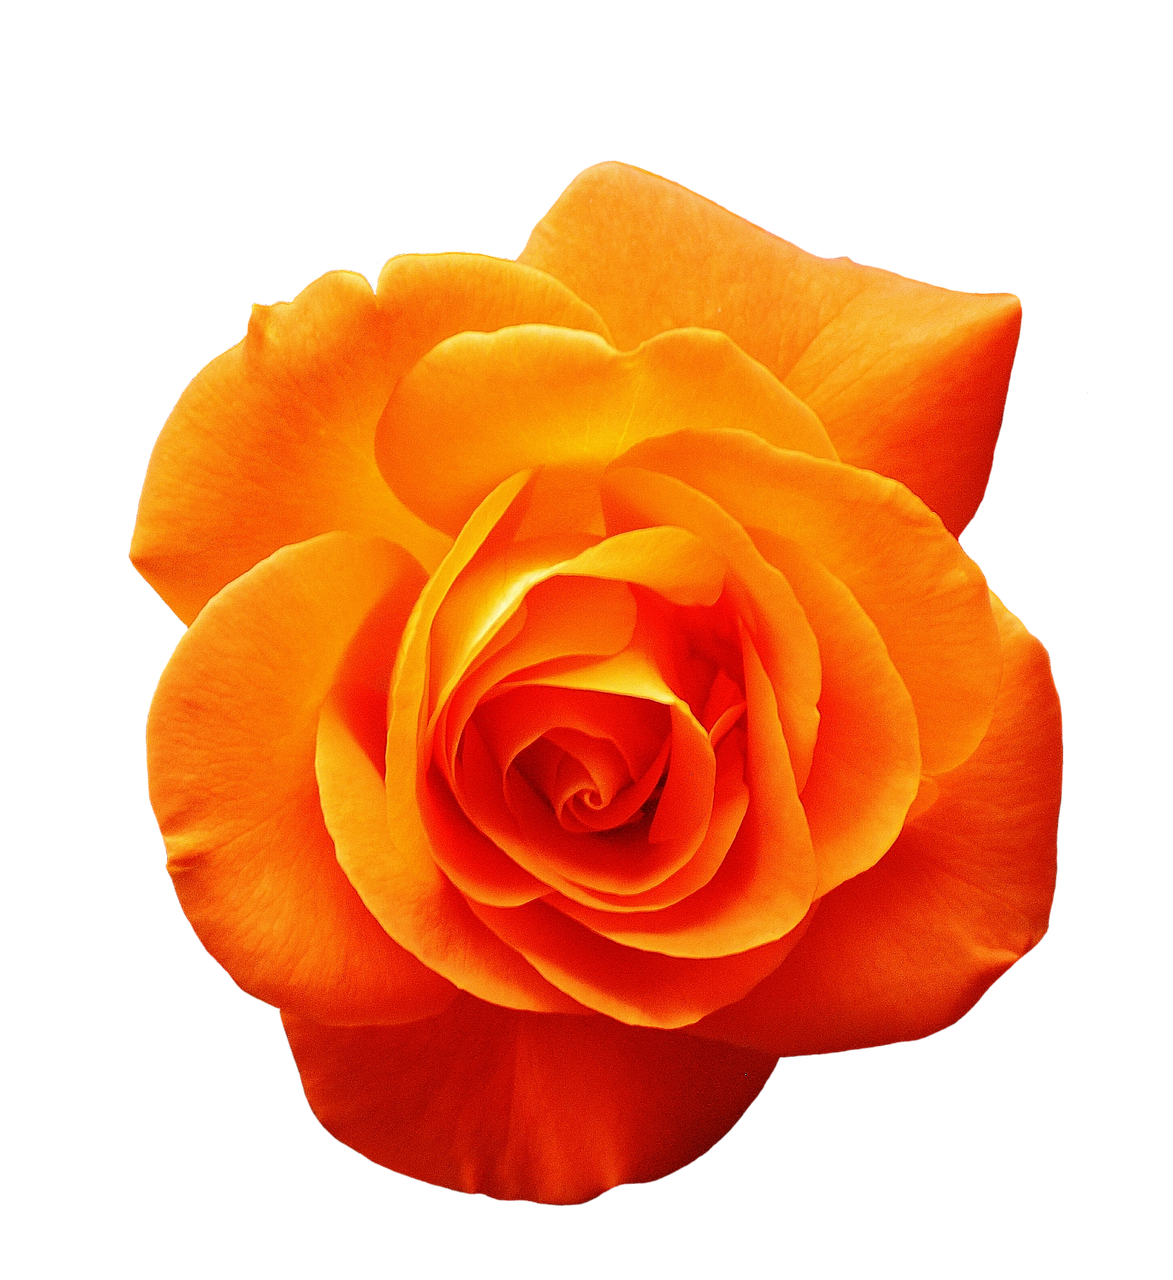 rose orange blossom free photo